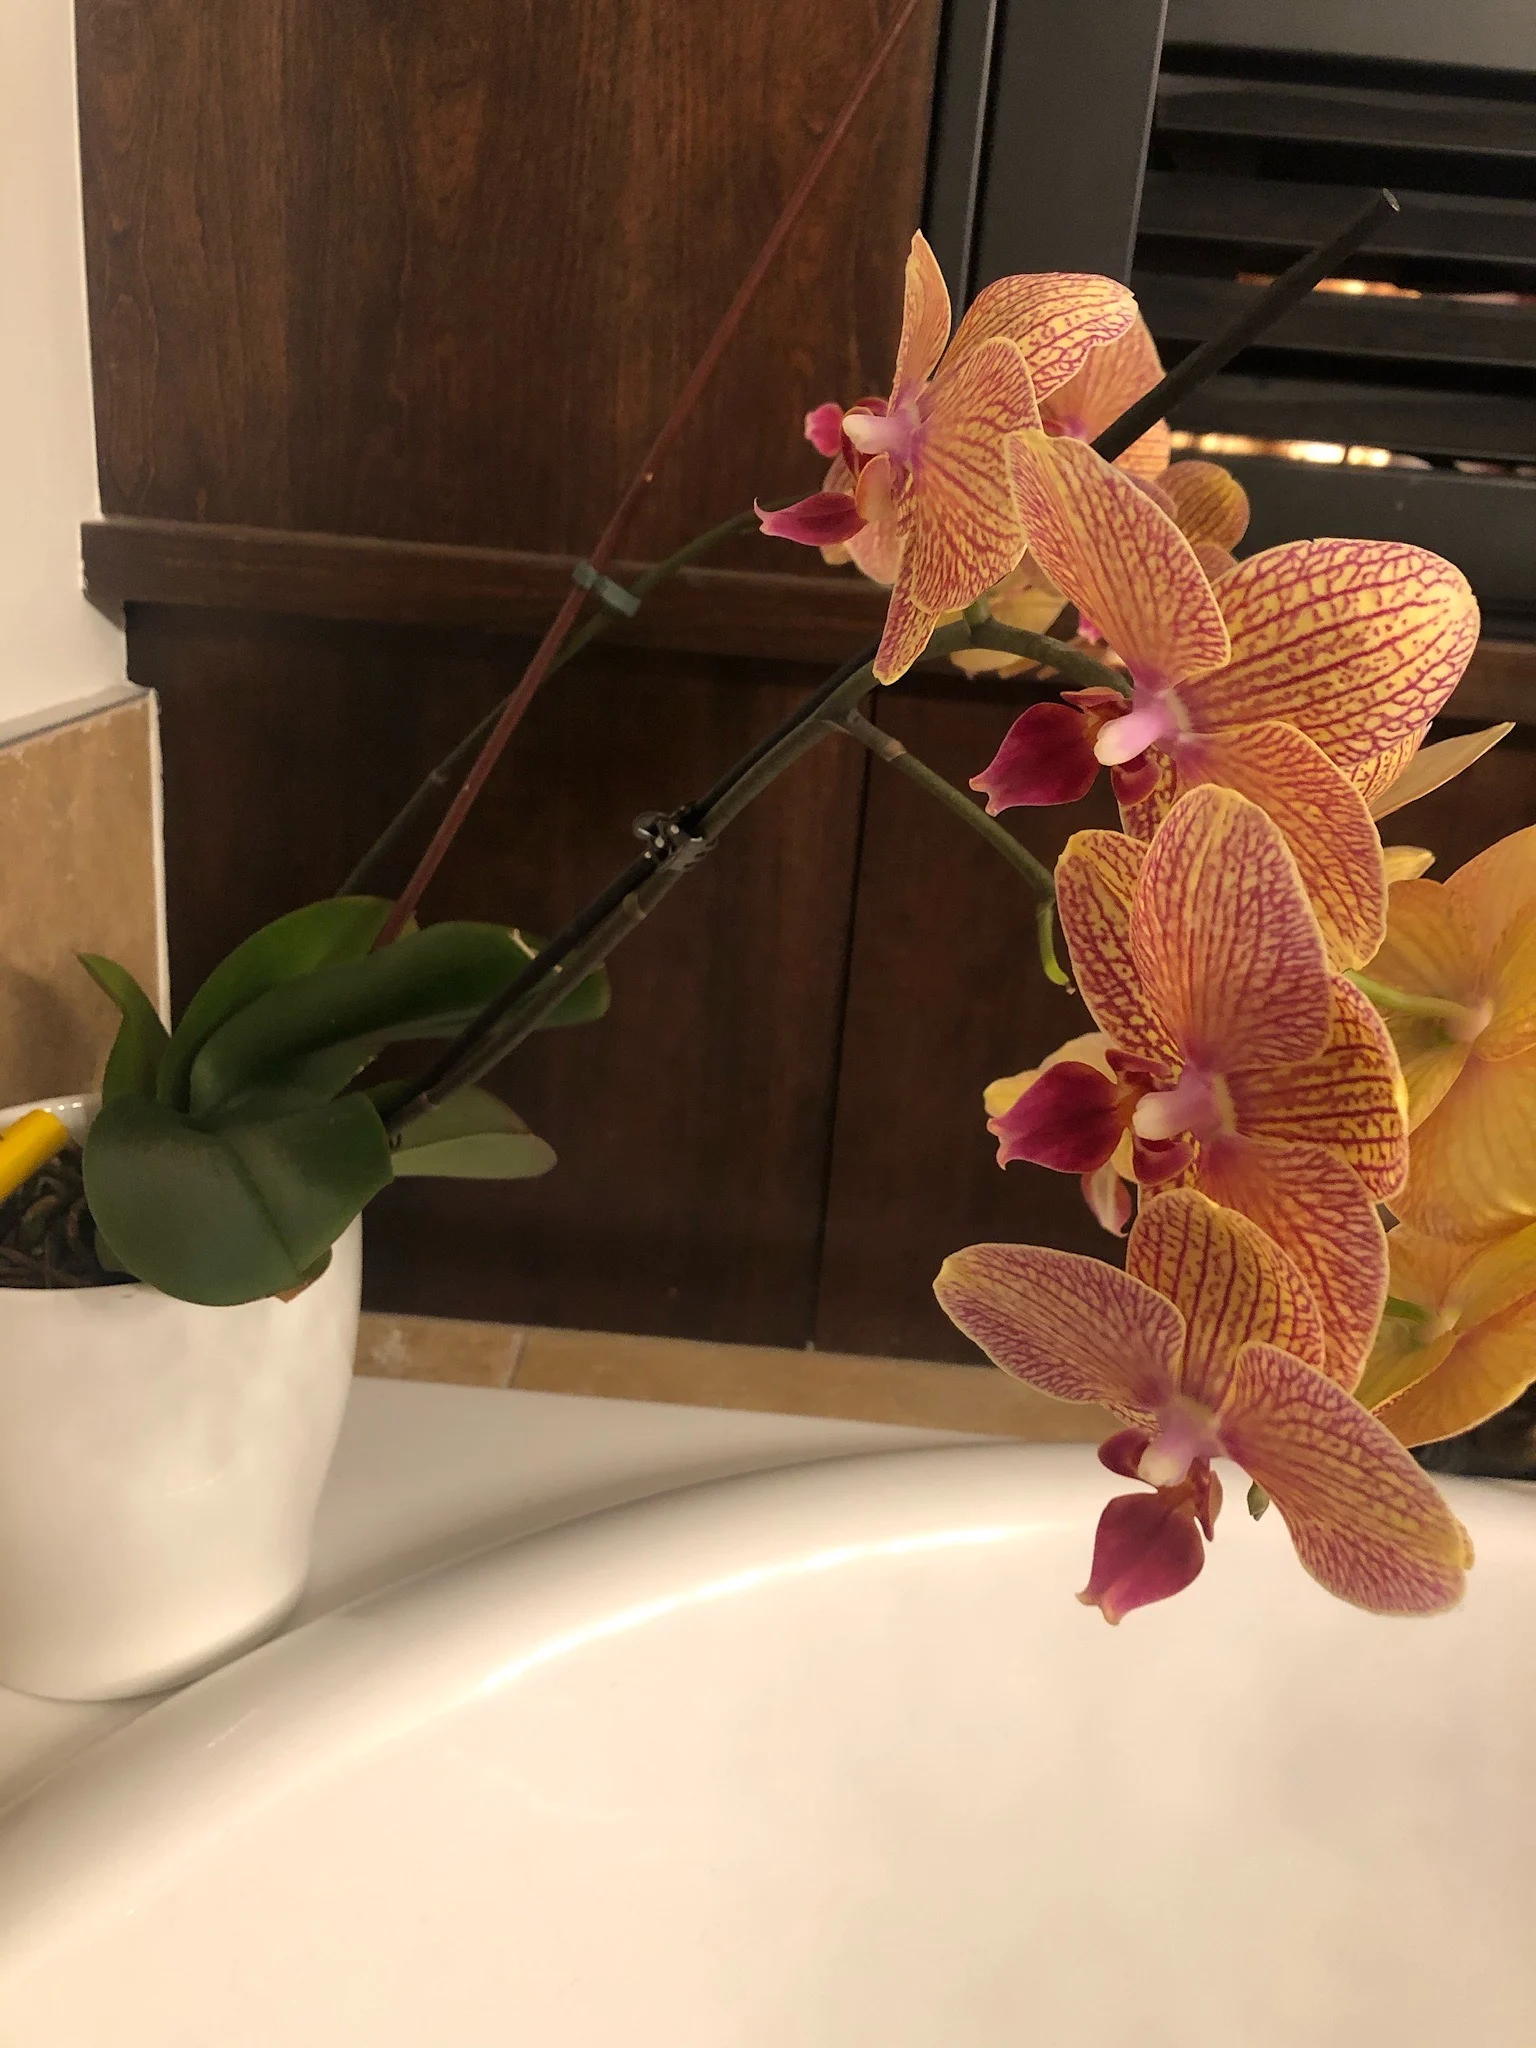 Moth orchid 'Chingrueys goldstaff'